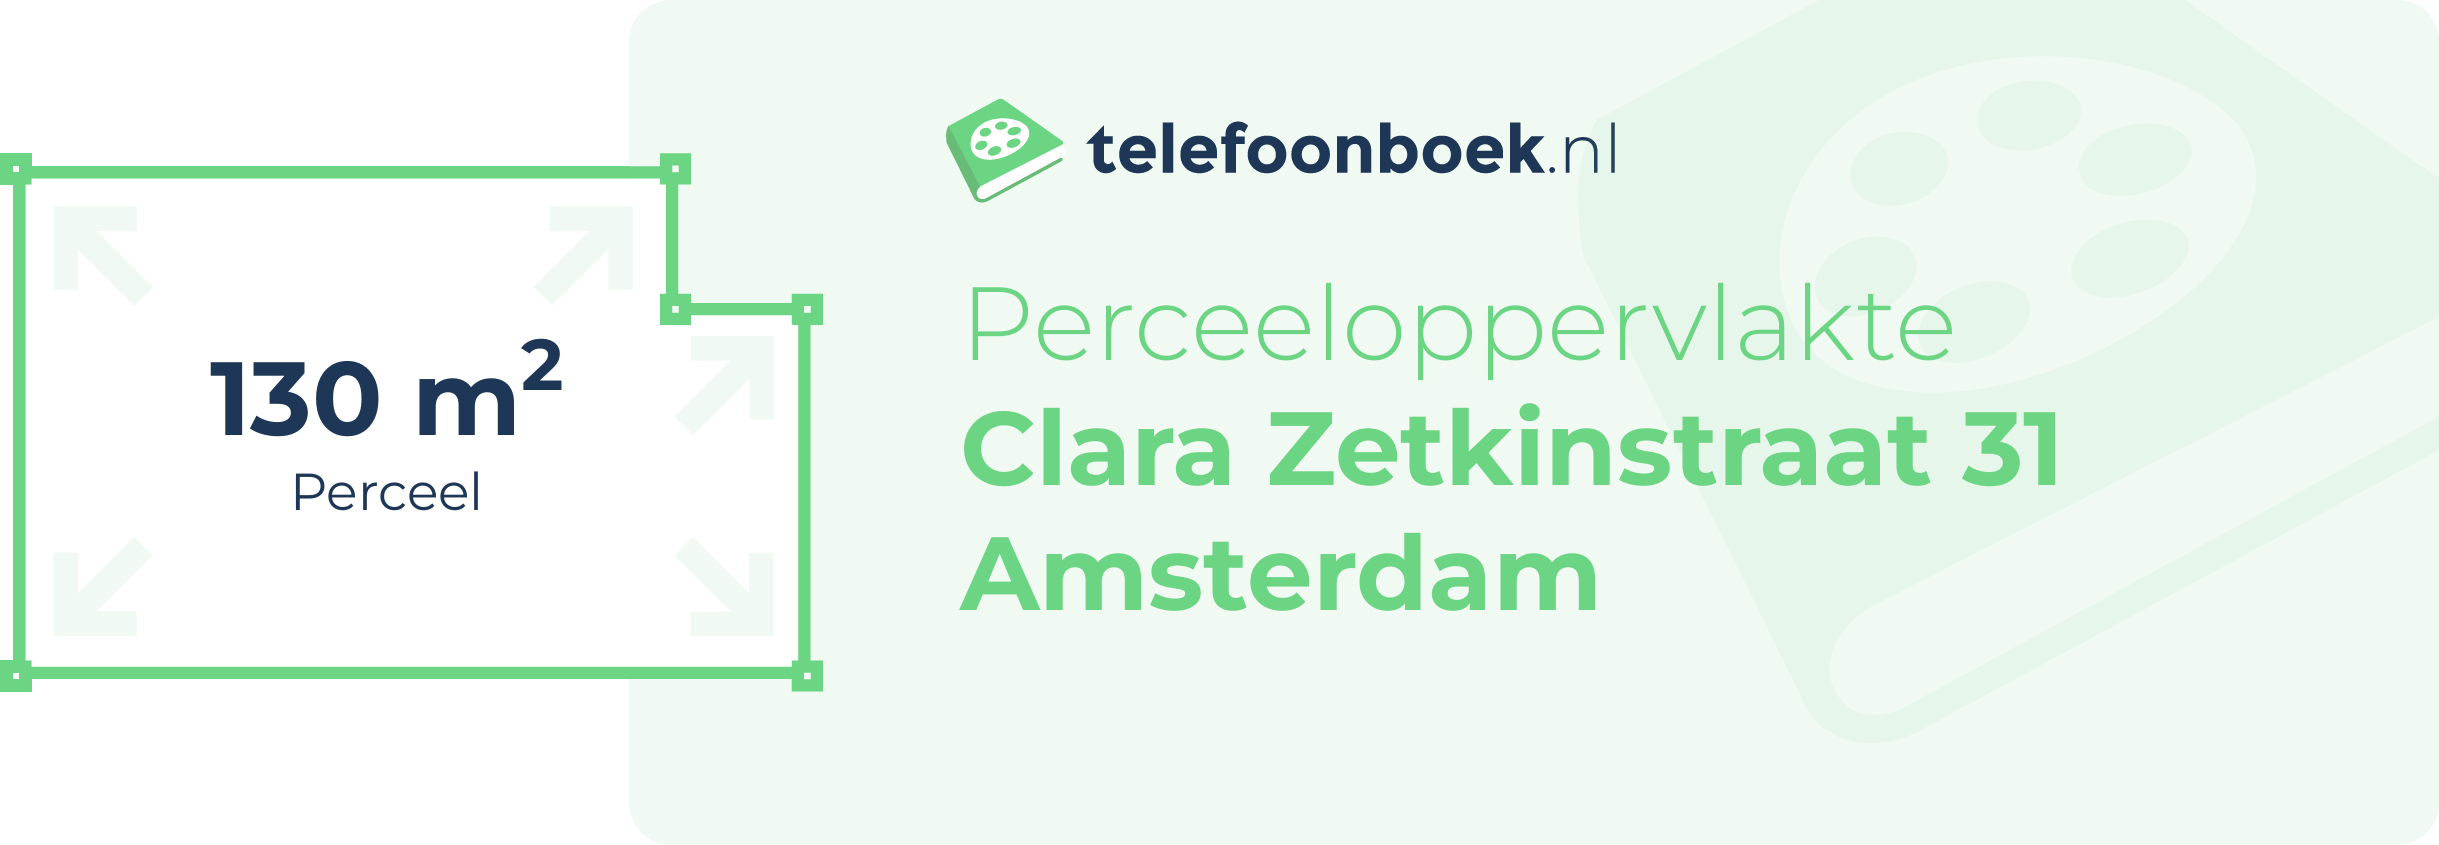 Perceeloppervlakte Clara Zetkinstraat 31 Amsterdam